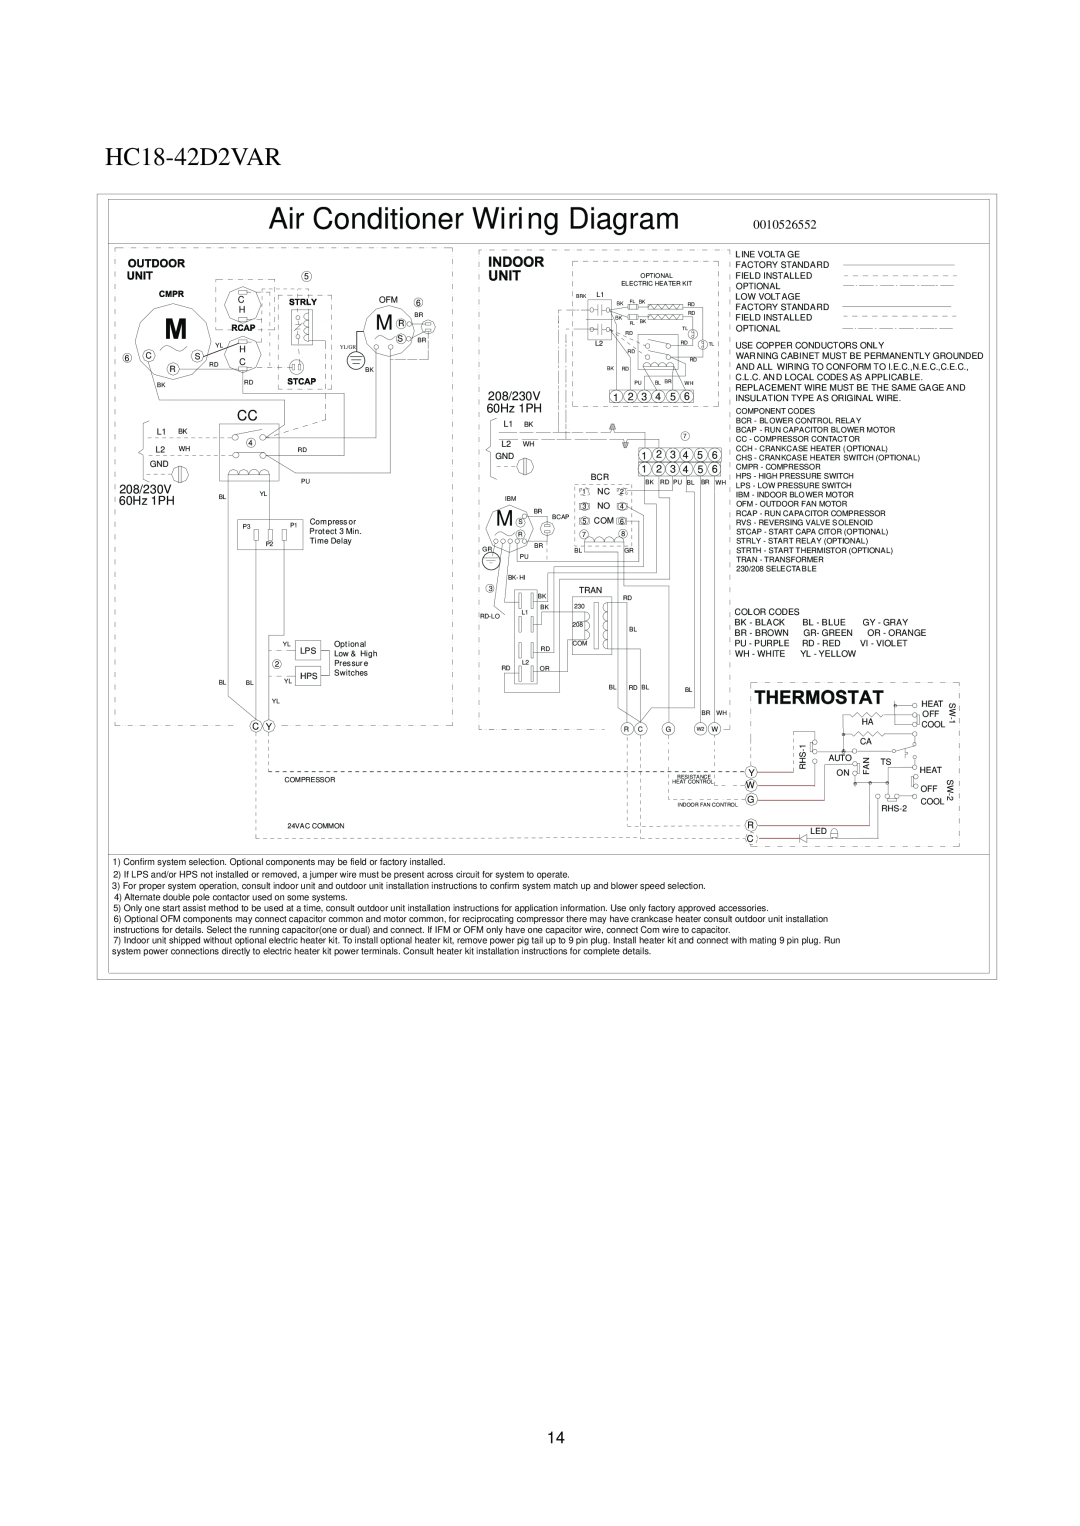 Haier HC36D2VAR, HC42D2VAR, HC30D2VAR HC18-42D2VAR, Air Conditioner Wiring Diagram, 0010526552, 208/230V, 60Hz 1PH 